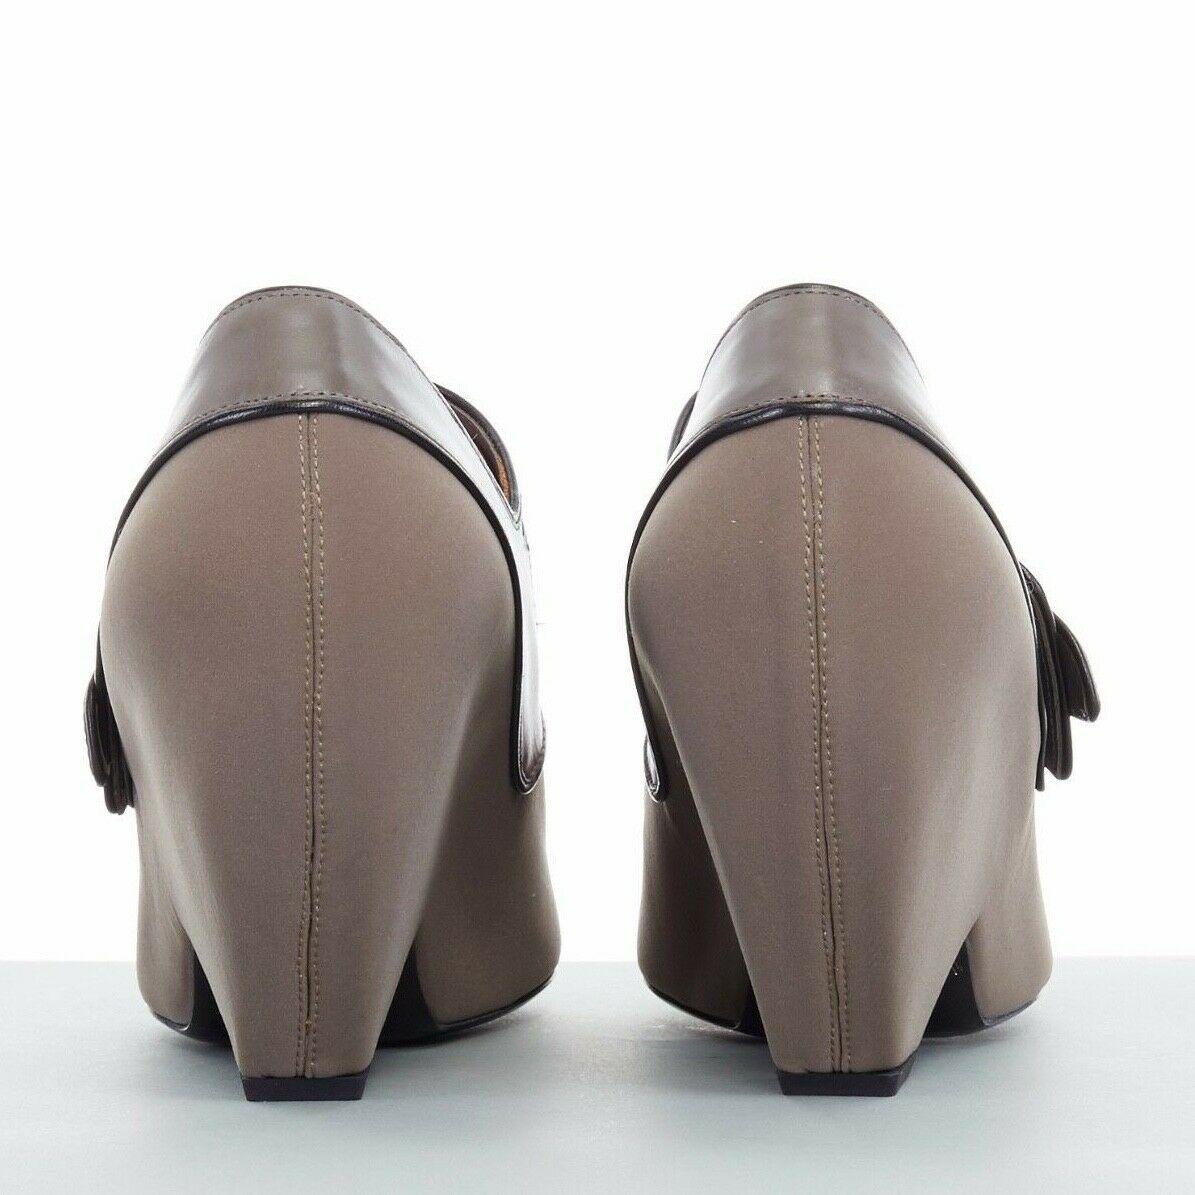 Women's new BALENCIAGA GHESQUIERE AW12 grey orange pointy wedge heel shoes EU38 US8 UK5